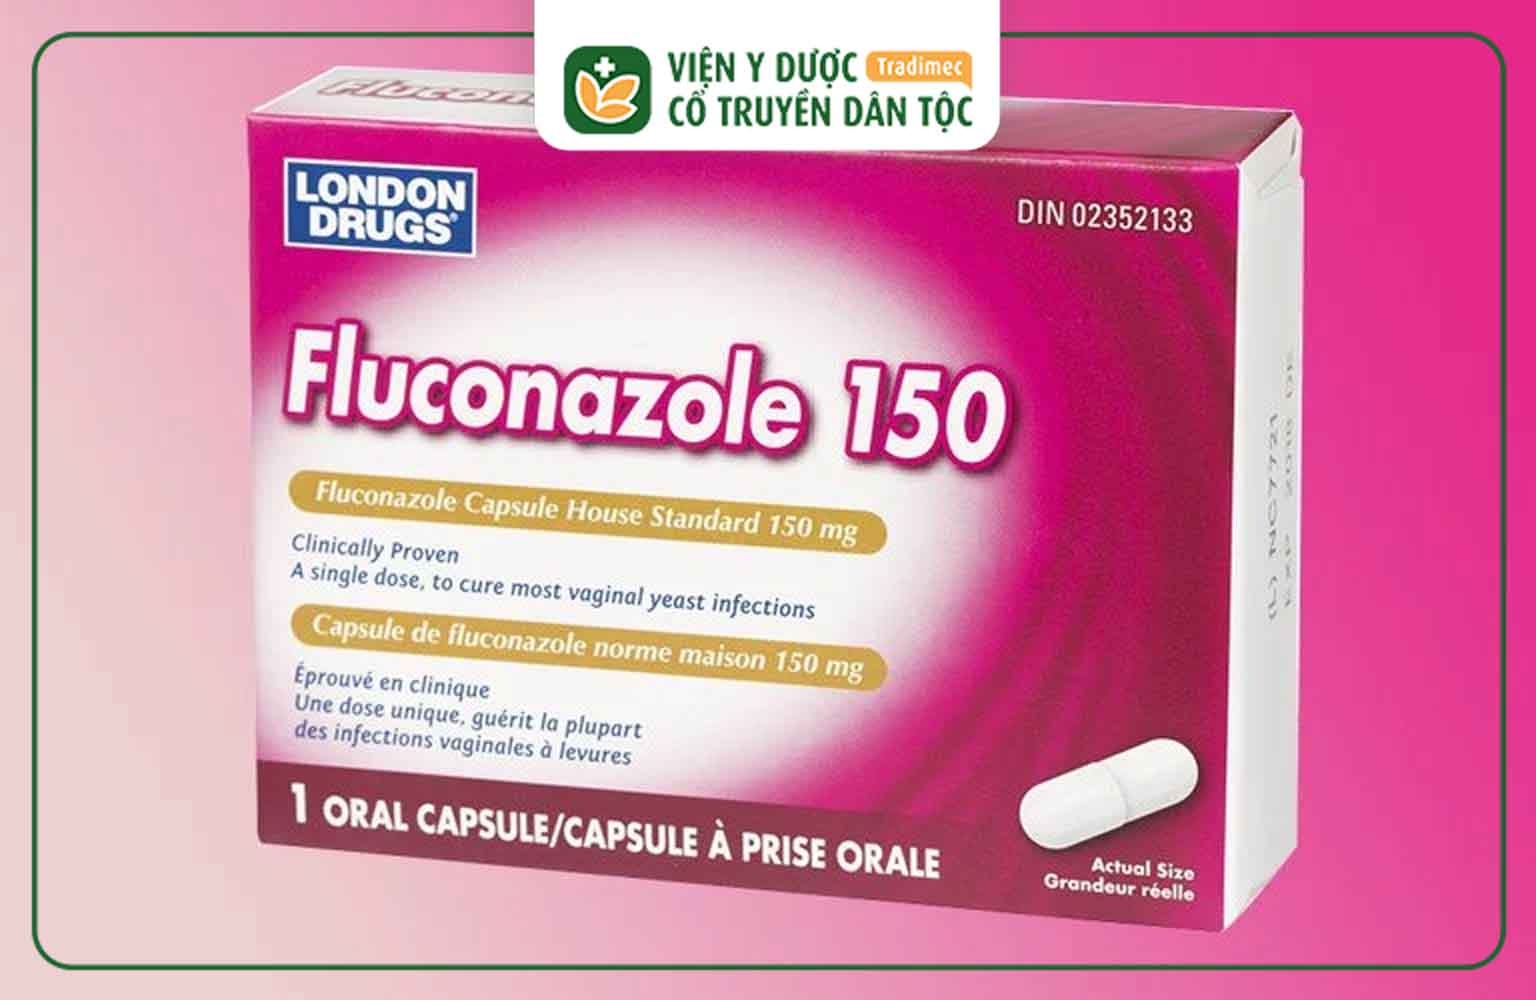 Fluconazole là thuốc chống nấm